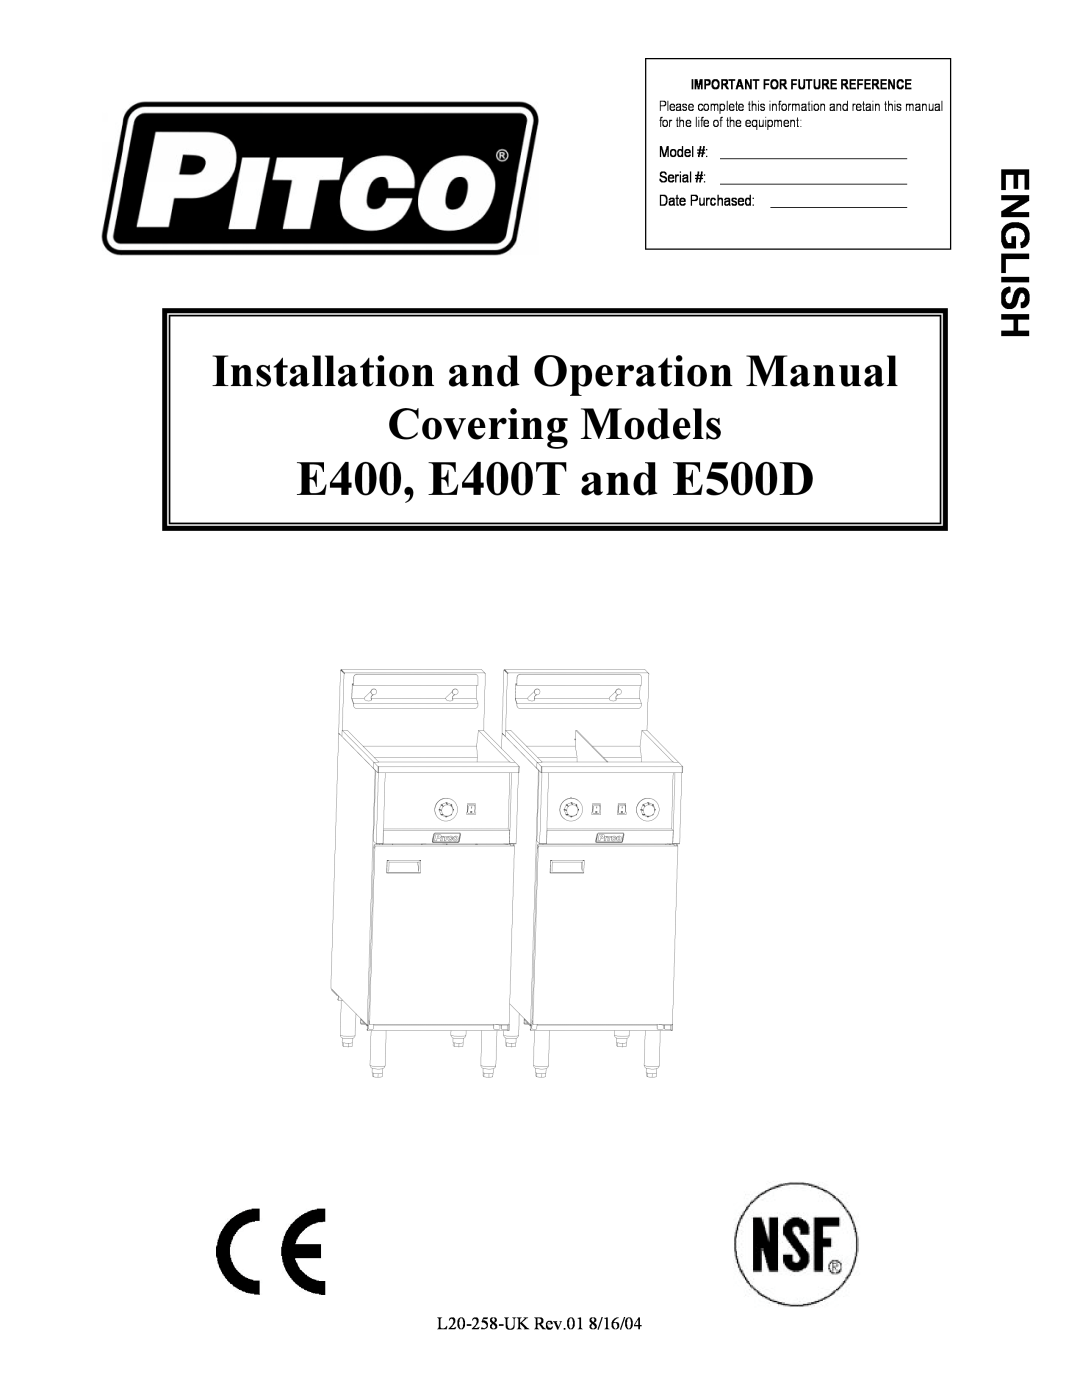 Pitco Frialator operation manual E400, E400T and E500D, English, Model # Serial # Date Purchased 